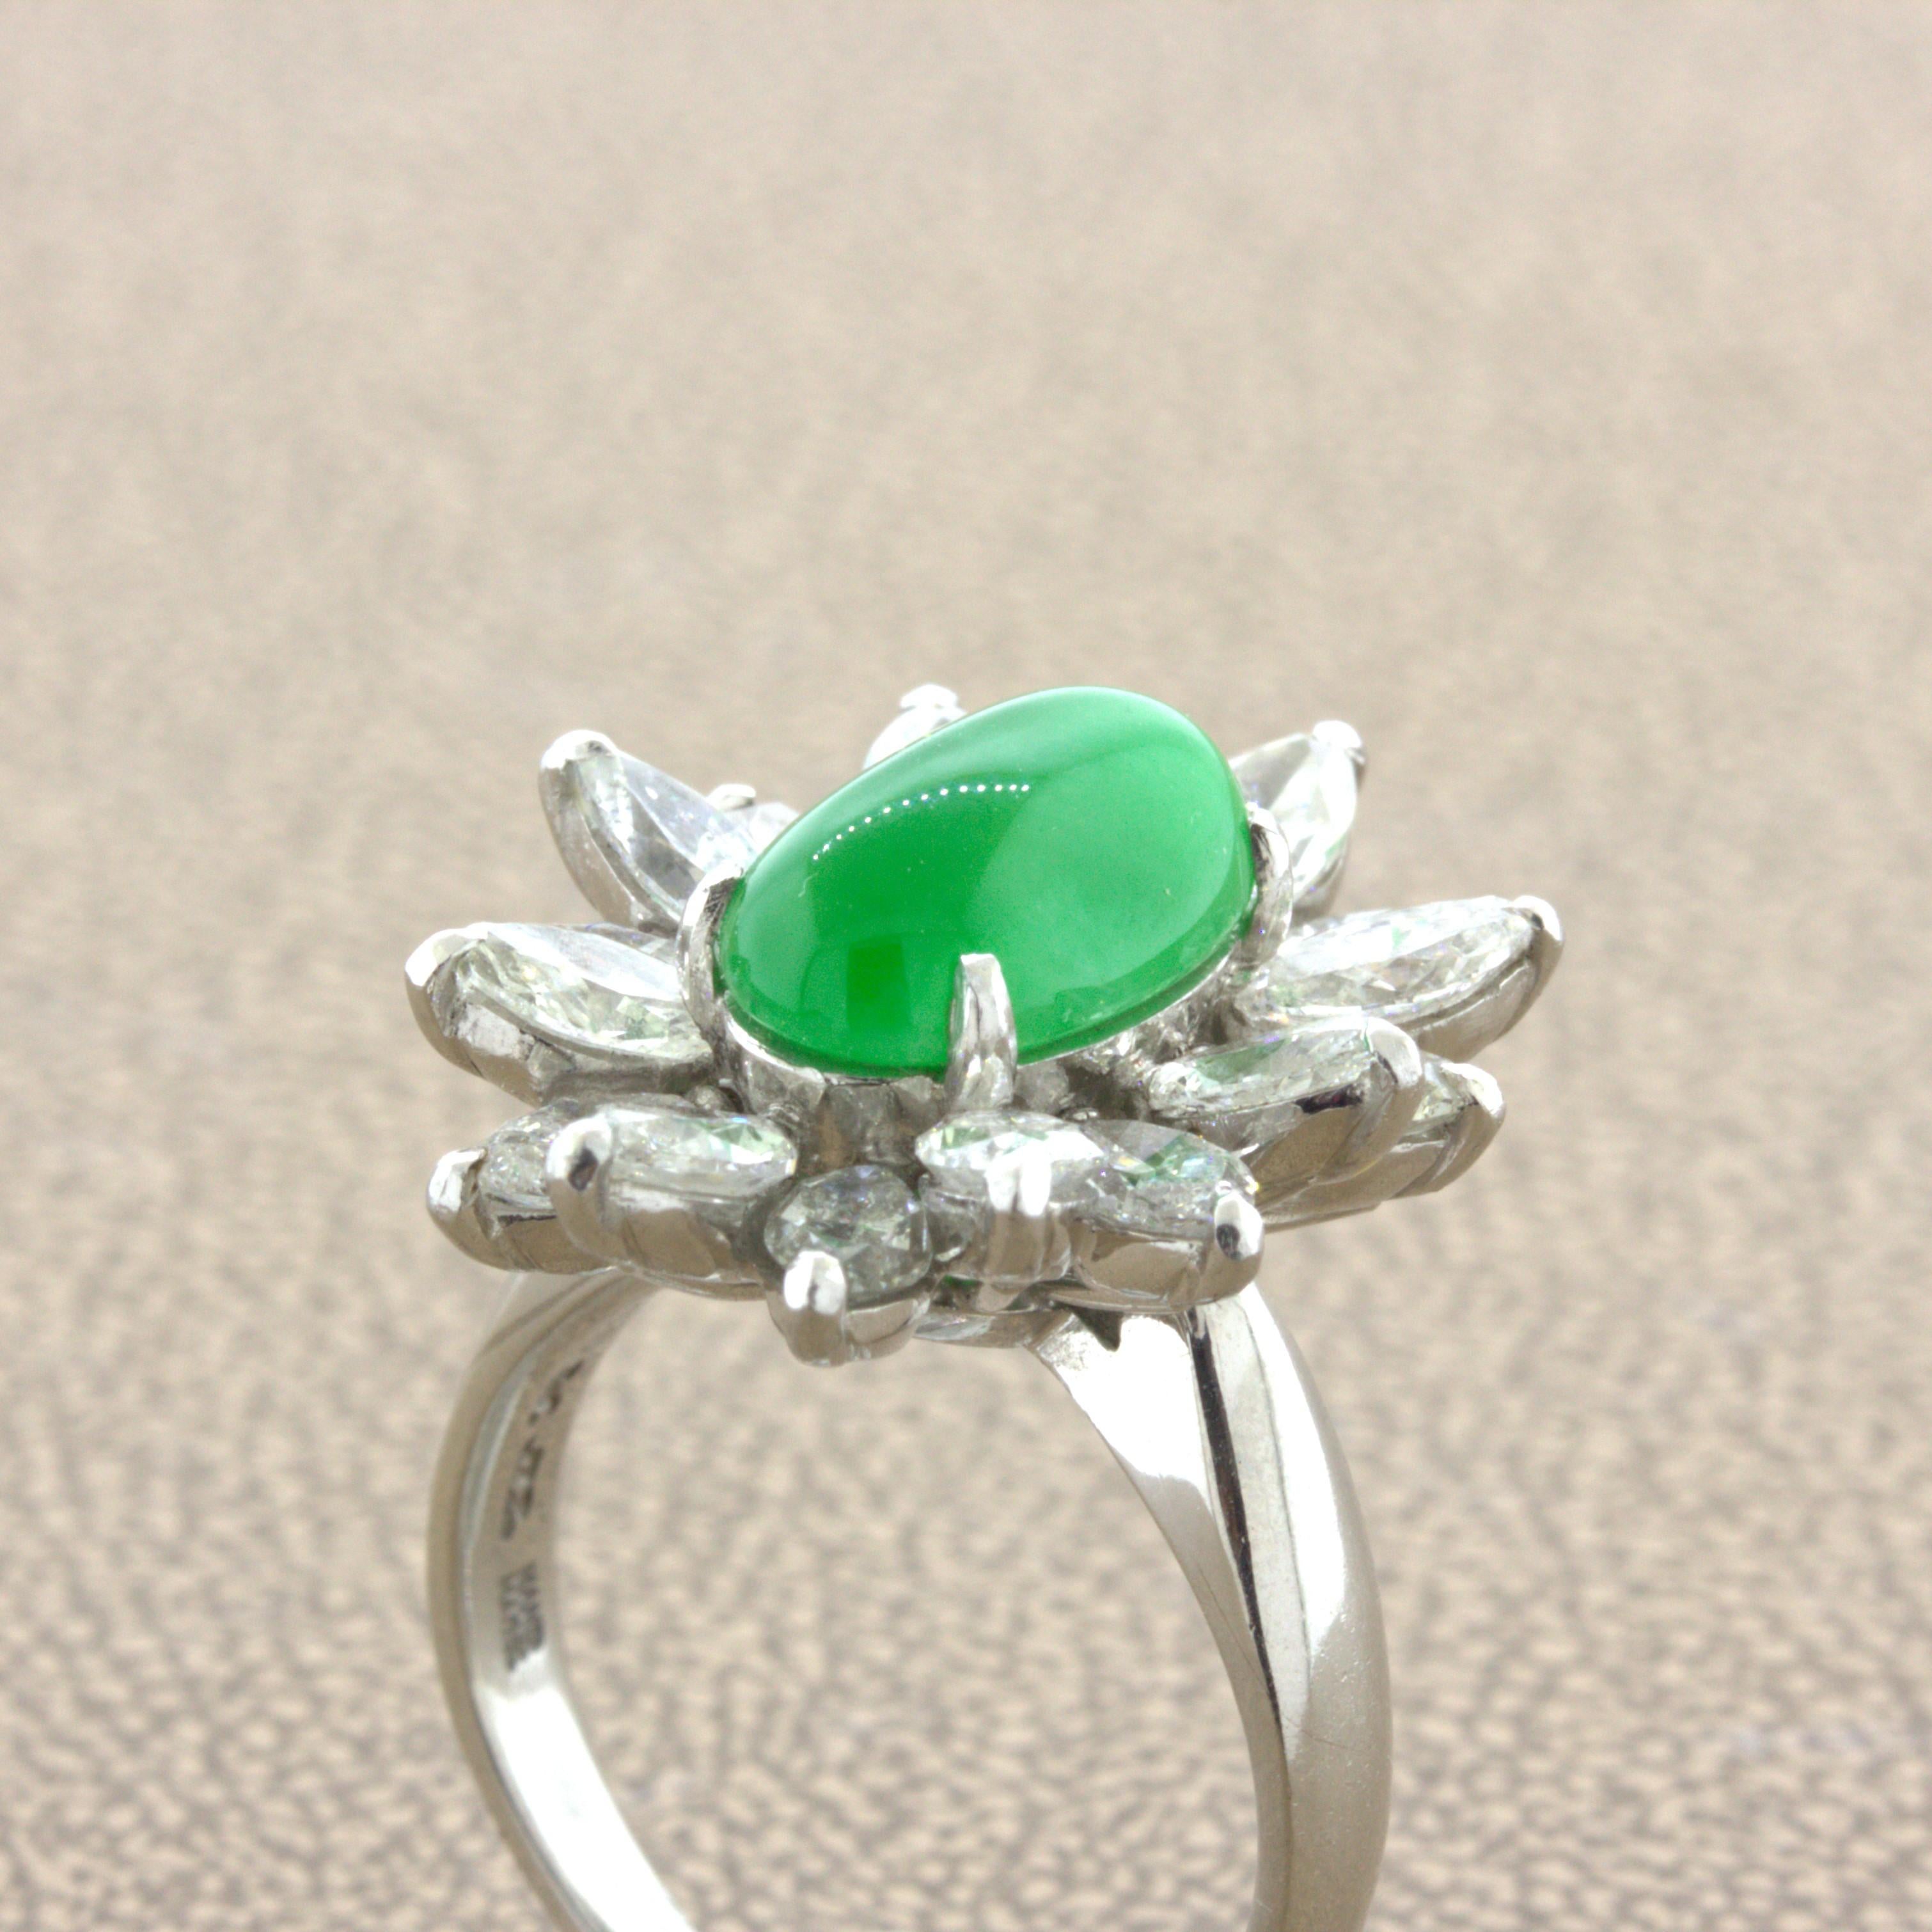 4.13 Carat Jadeite Jade Diamond Sunburst Platinum Ring, GIA Certified “Type A” For Sale 3